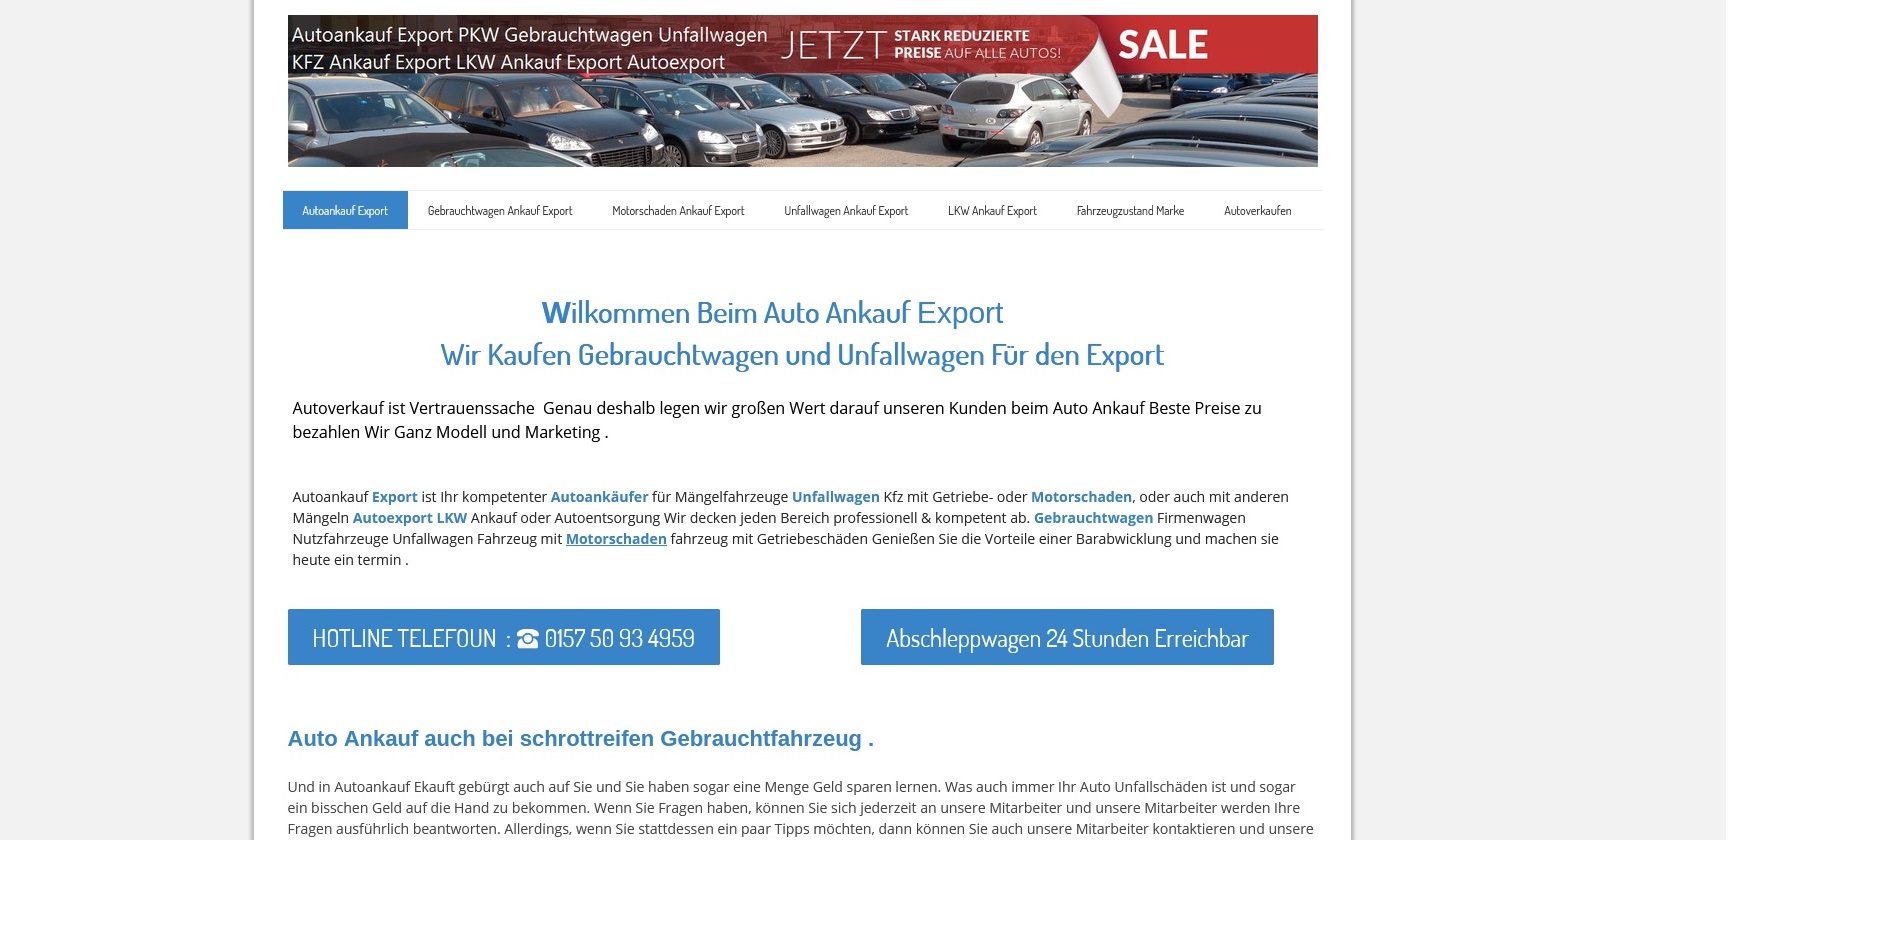 Kfz-Ankauf-export.de | Autoankauf Wiesbaden | Autoankauf Export Wiesbaden